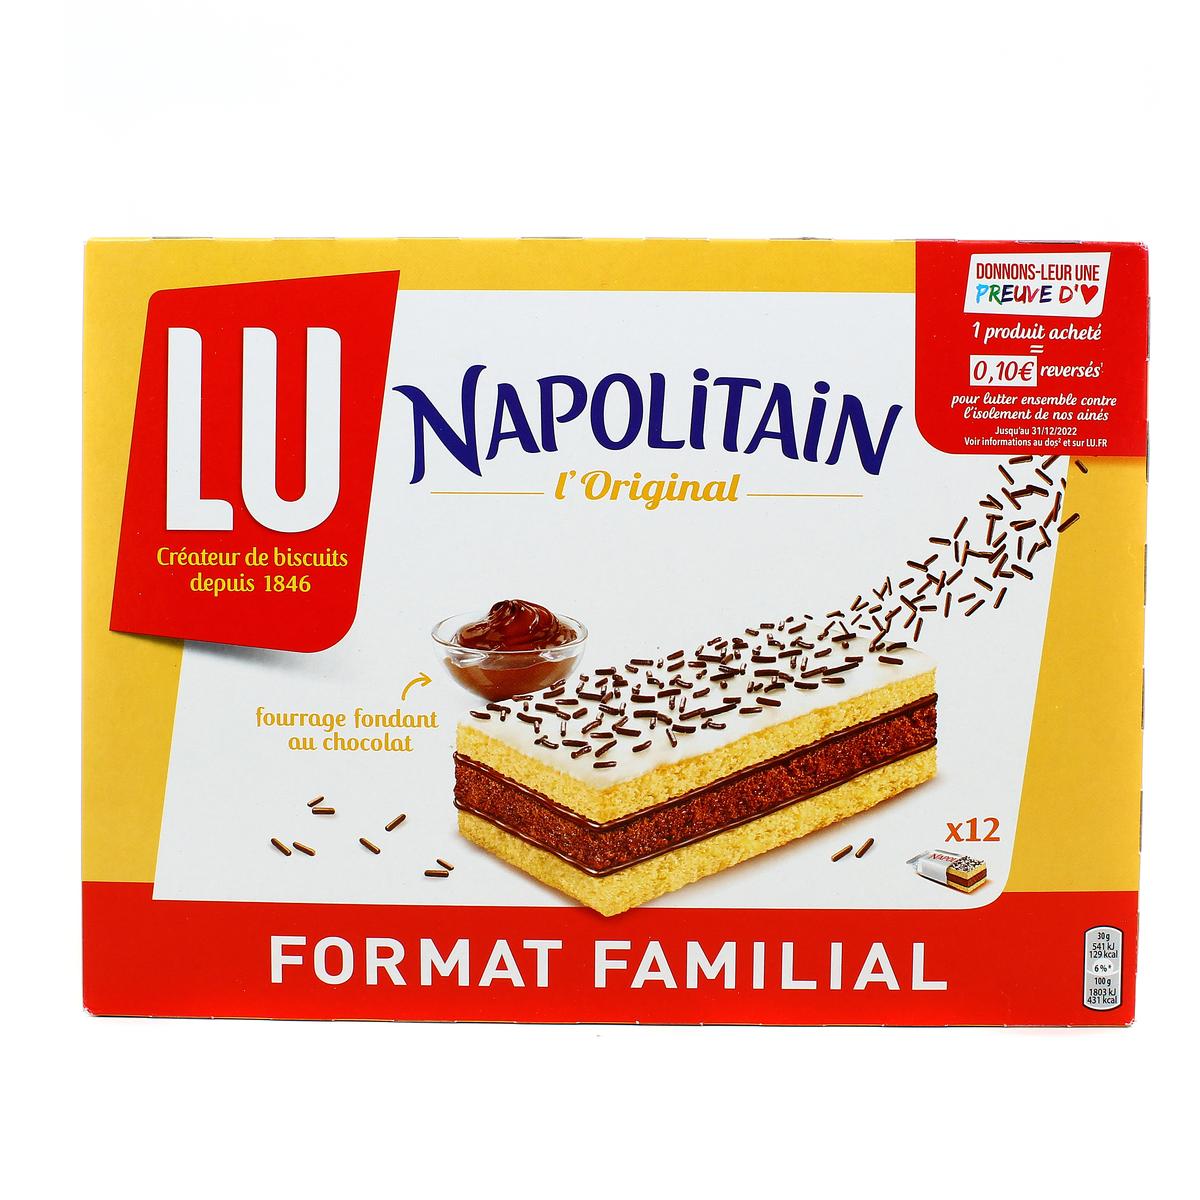 Napolitain, The Original